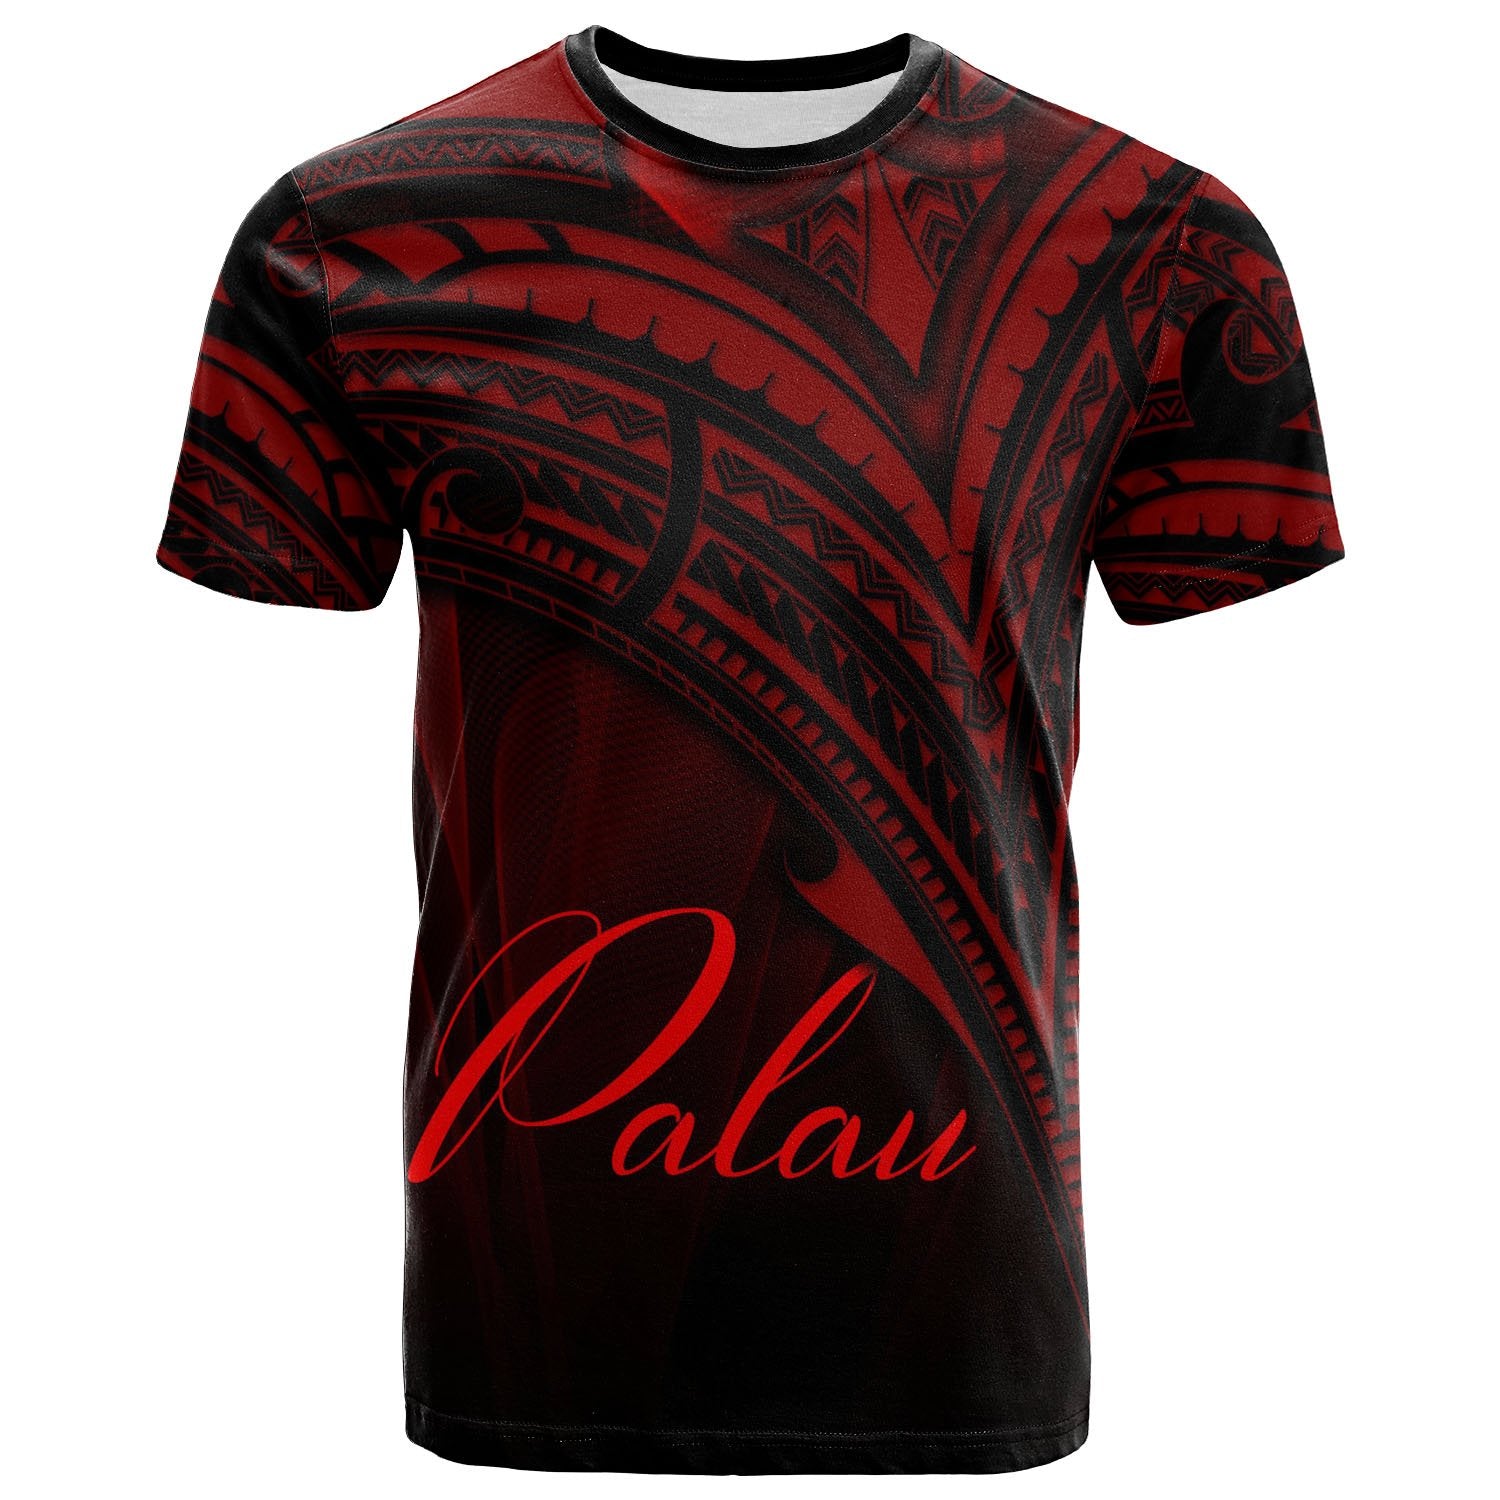 Palau T Shirt Red Color Cross Style Unisex Black - Polynesian Pride